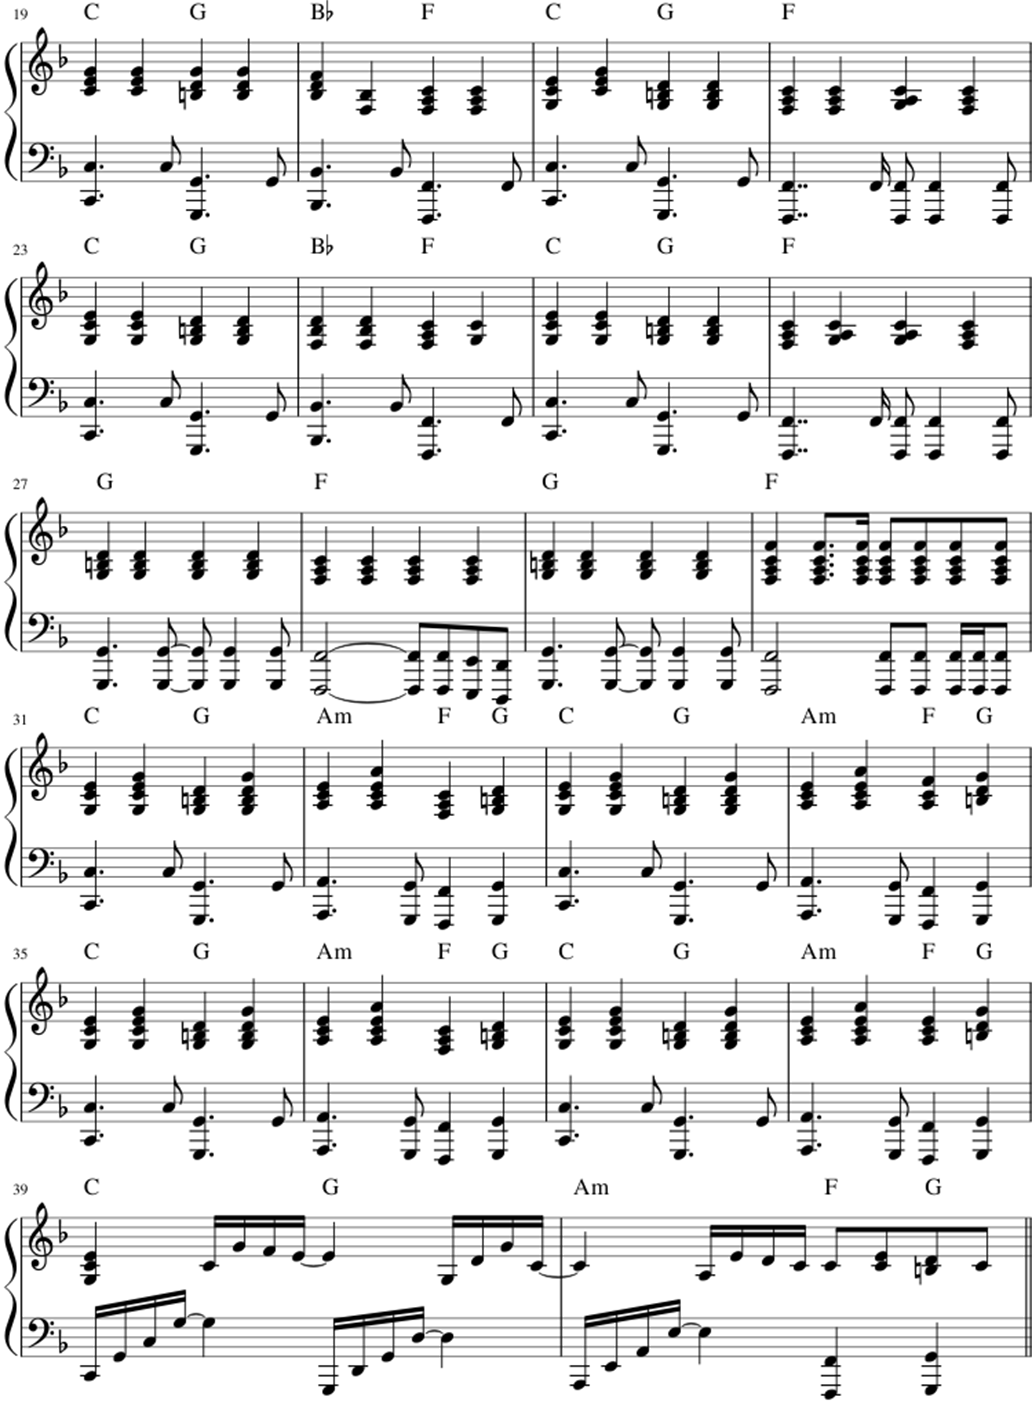 Believe sheet music notes 2